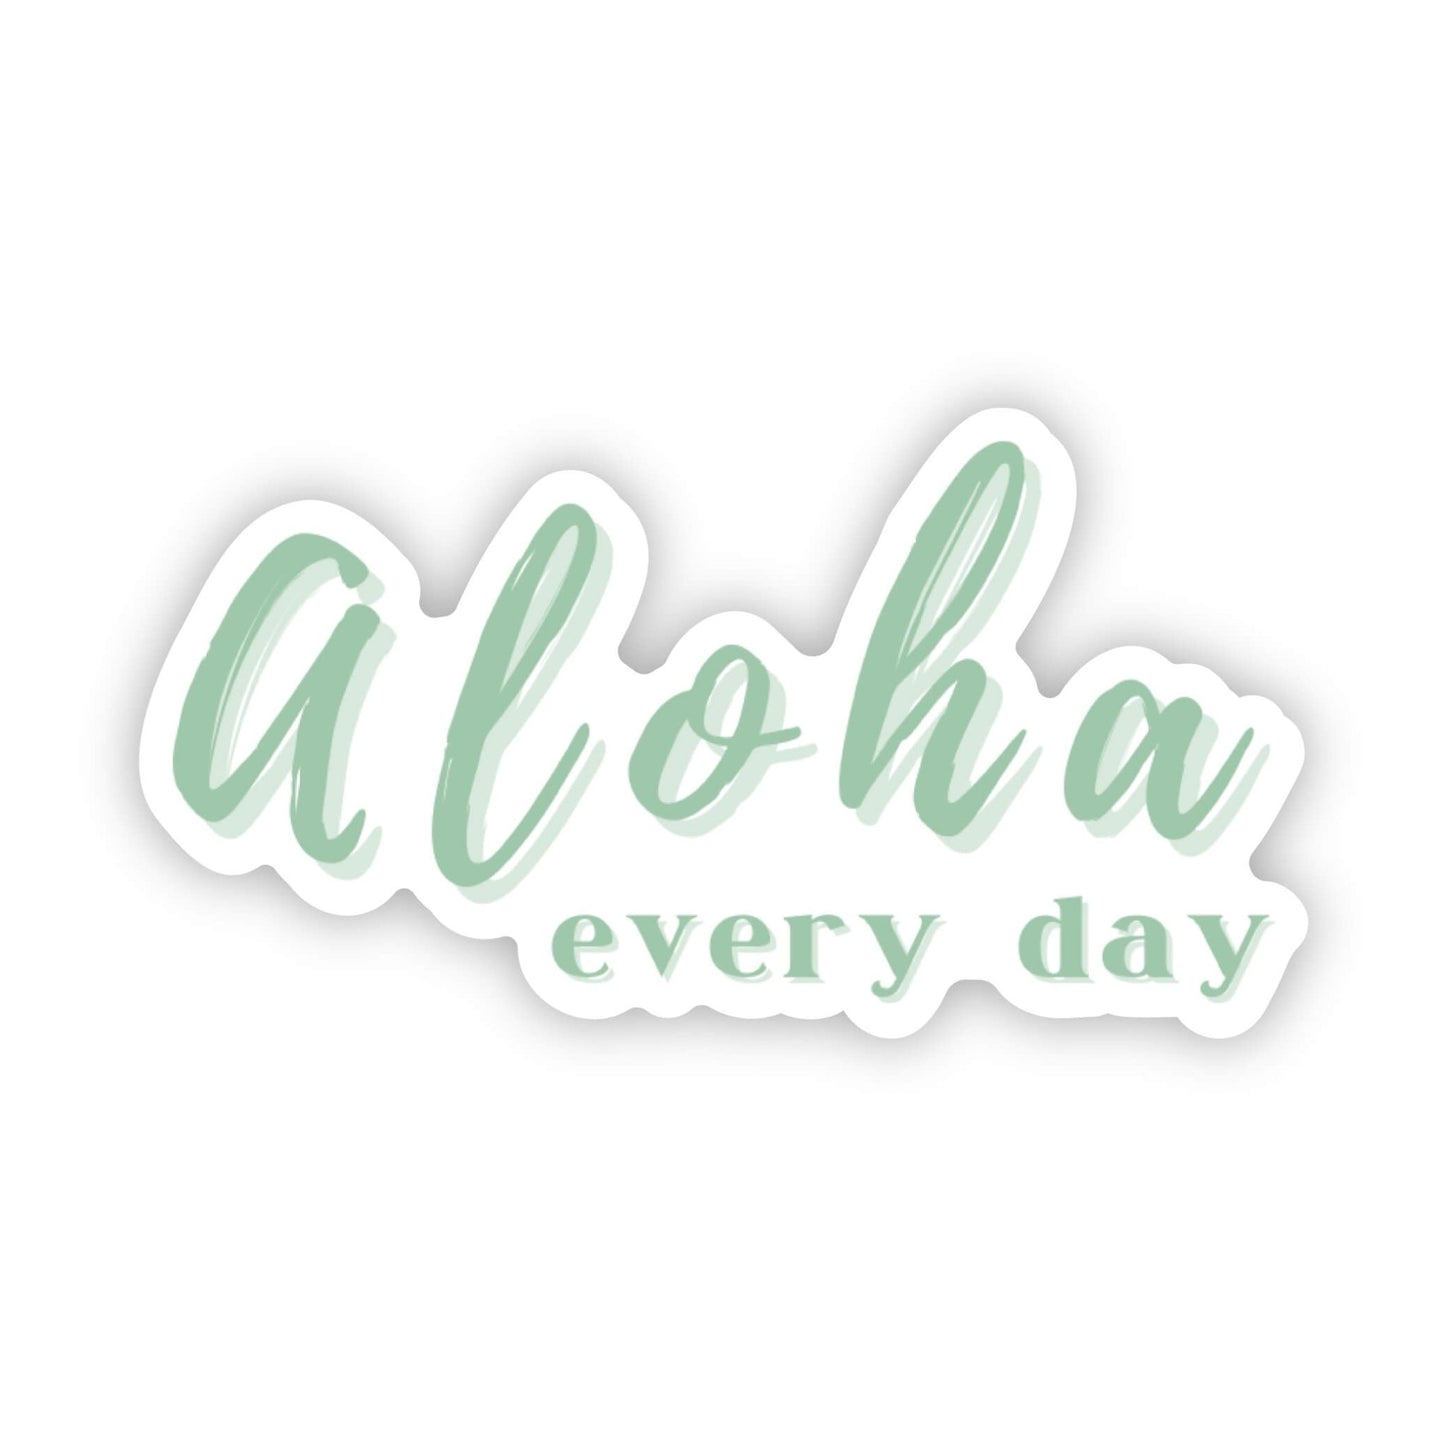 Aloha Every Day Sticker 3" Global Village Kailua Boutique